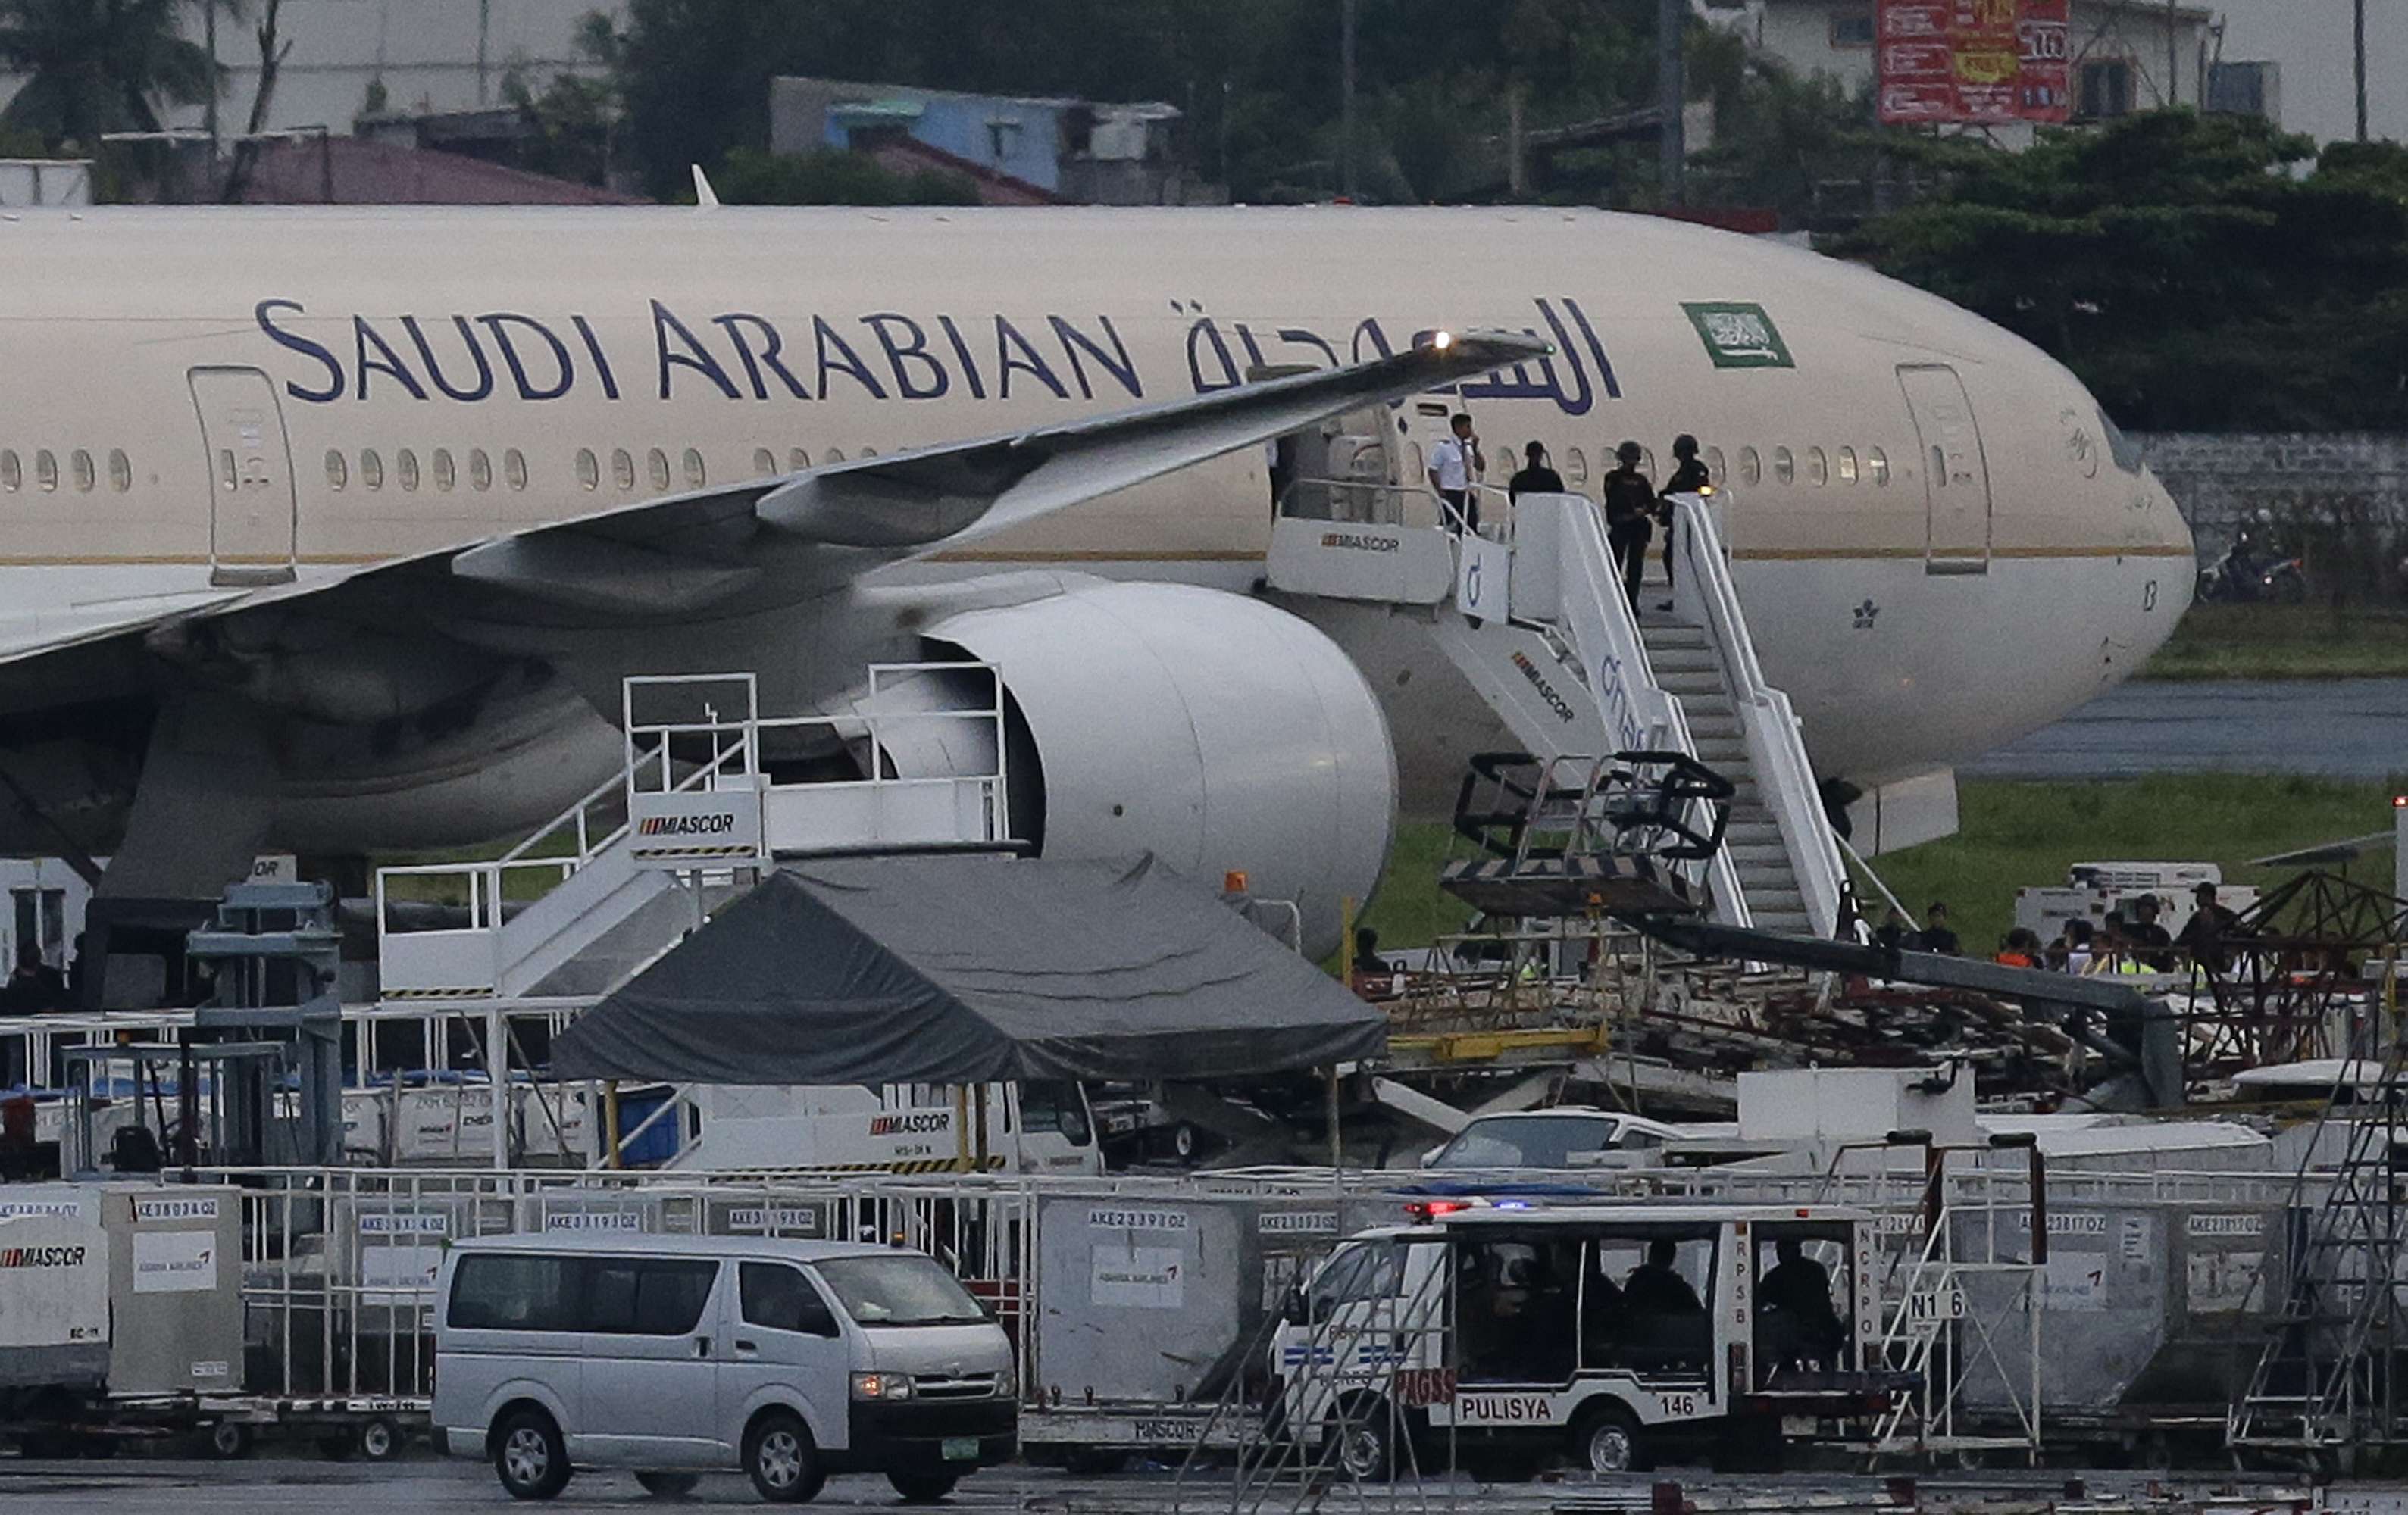 A Saudi Arabian Airlines passenger plane